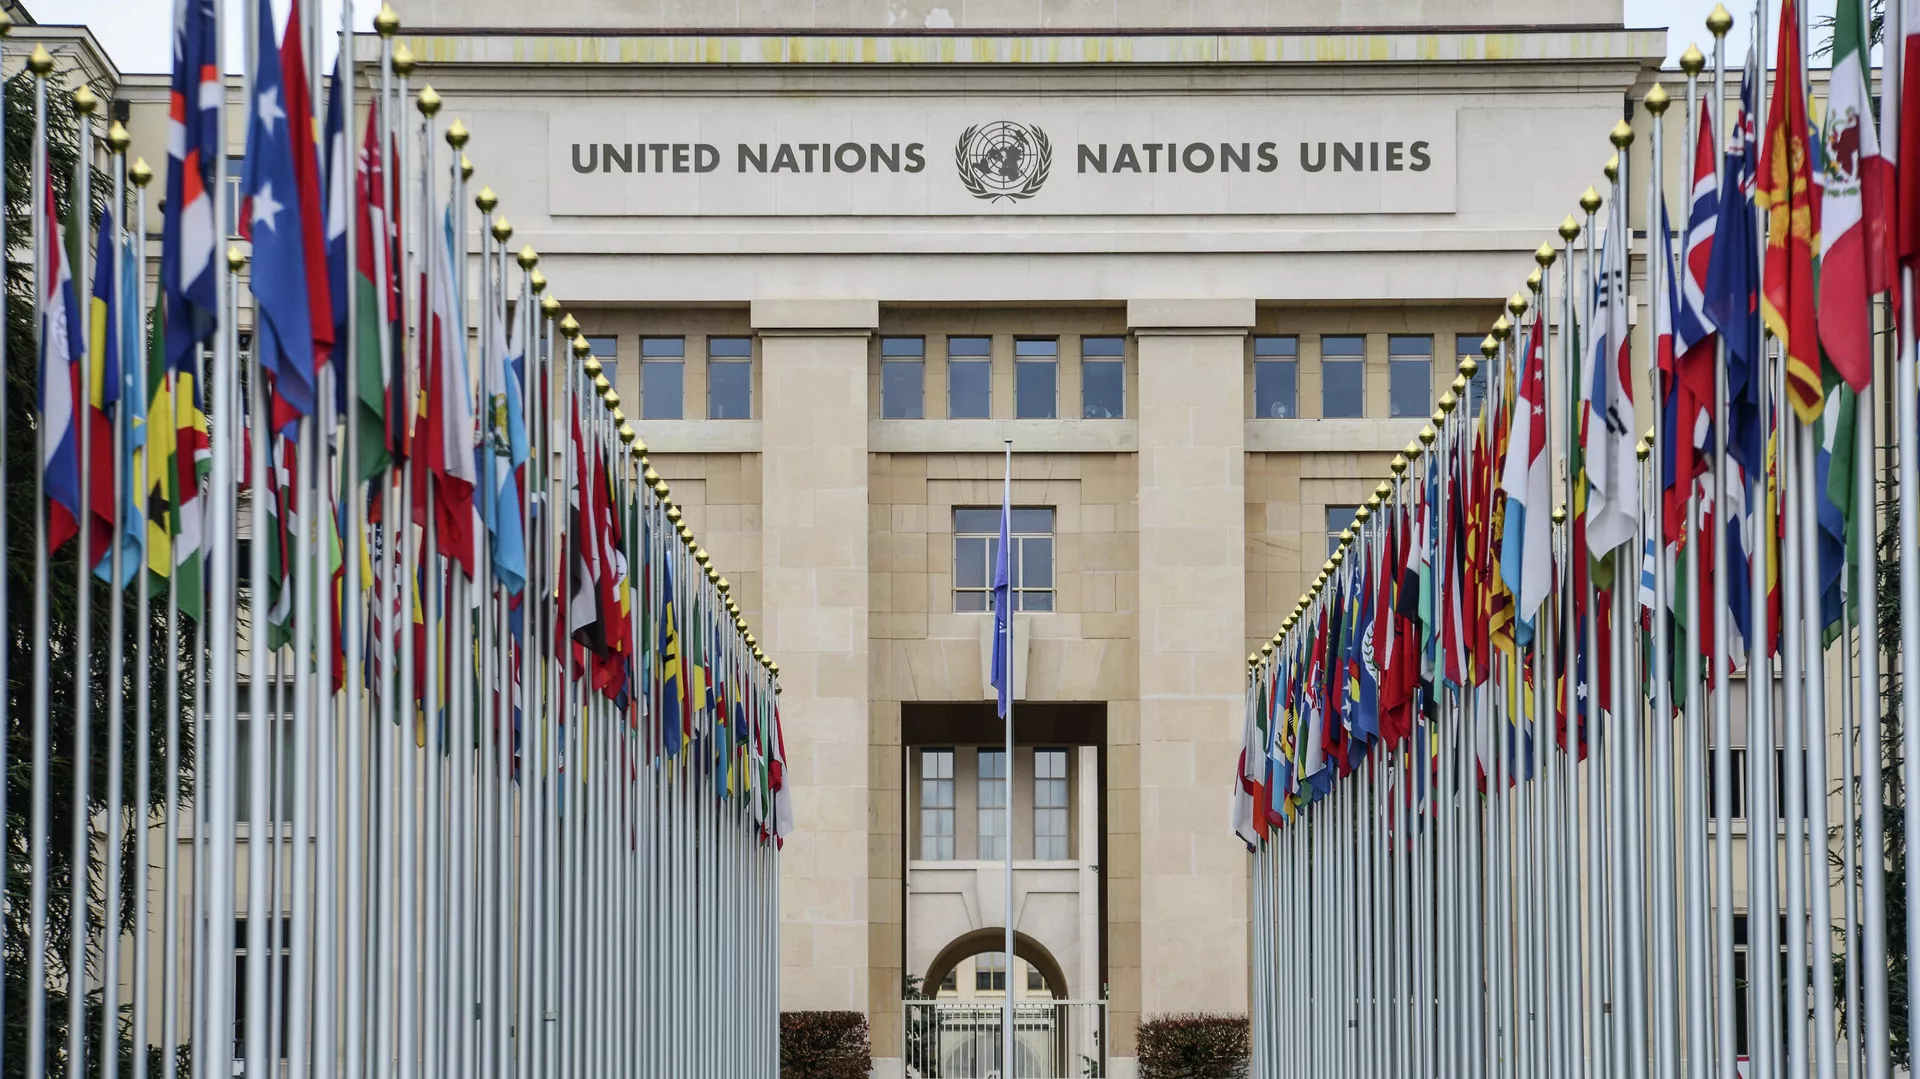 Аллея флагов возле здания ООН в Женеве - РИА Новости, 1920, 02.12.2020